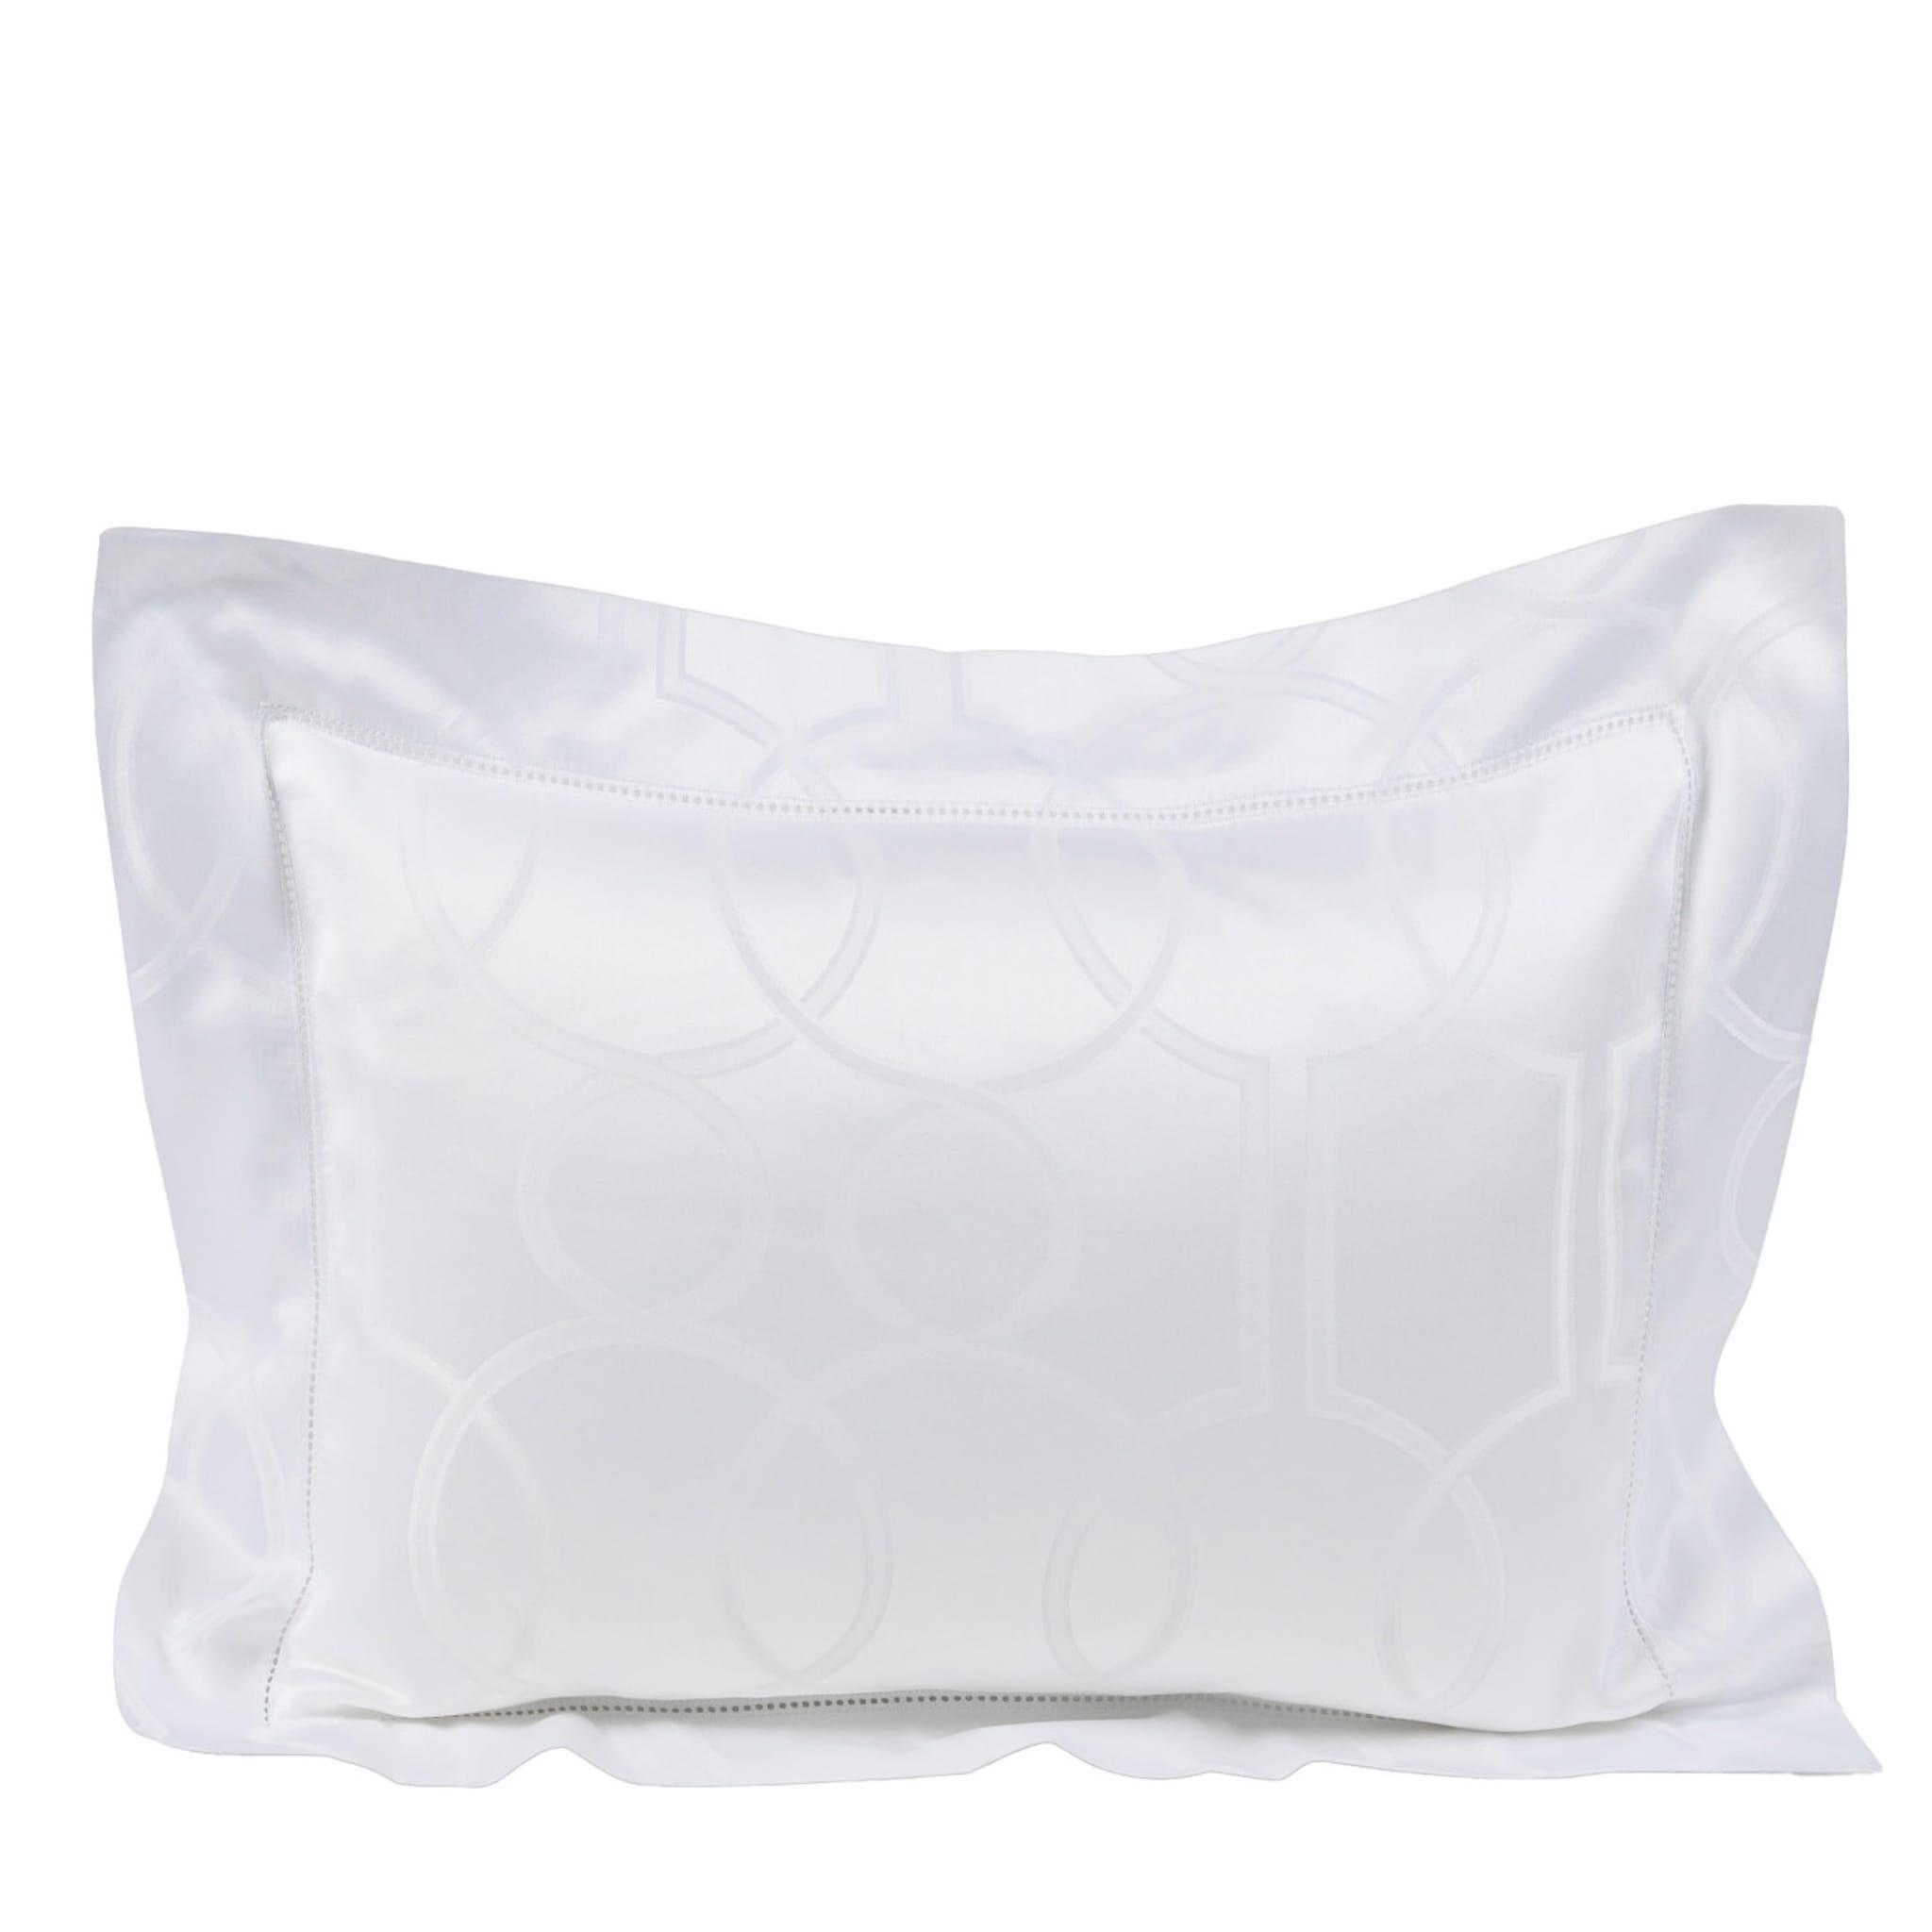 Shangri-La Boudoir Rectangular Patterned White Pillowcase - Main view